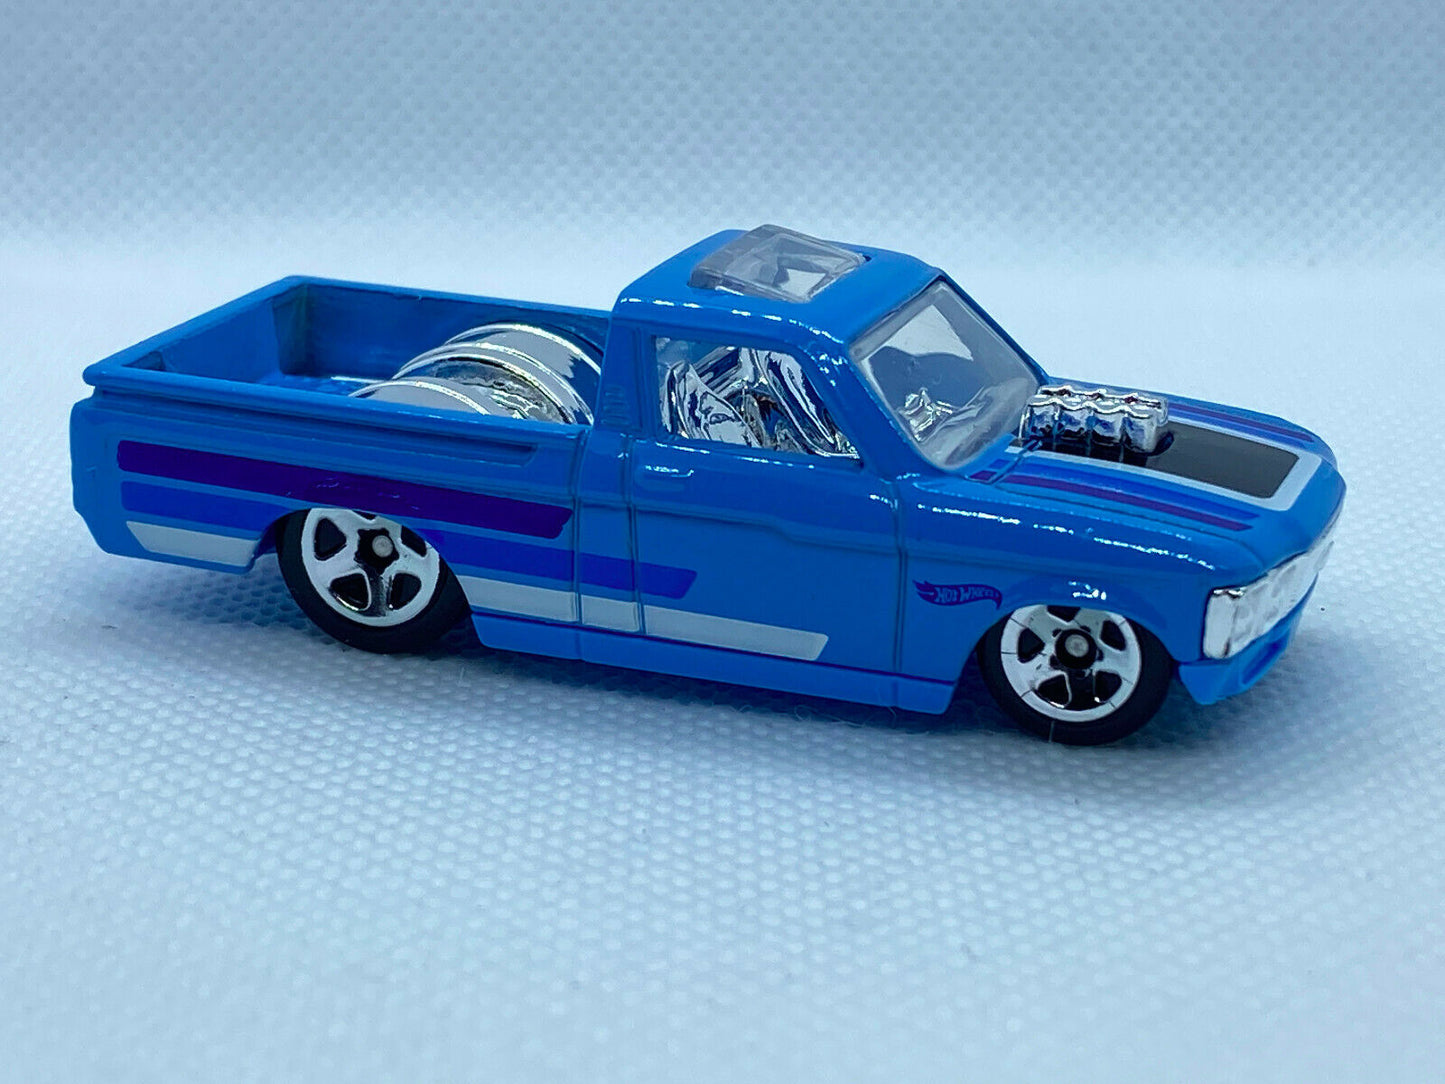 2021 Hot Wheels Pick Up Series #5/5 Custom '72 Chevy Luv Blue LOOSE